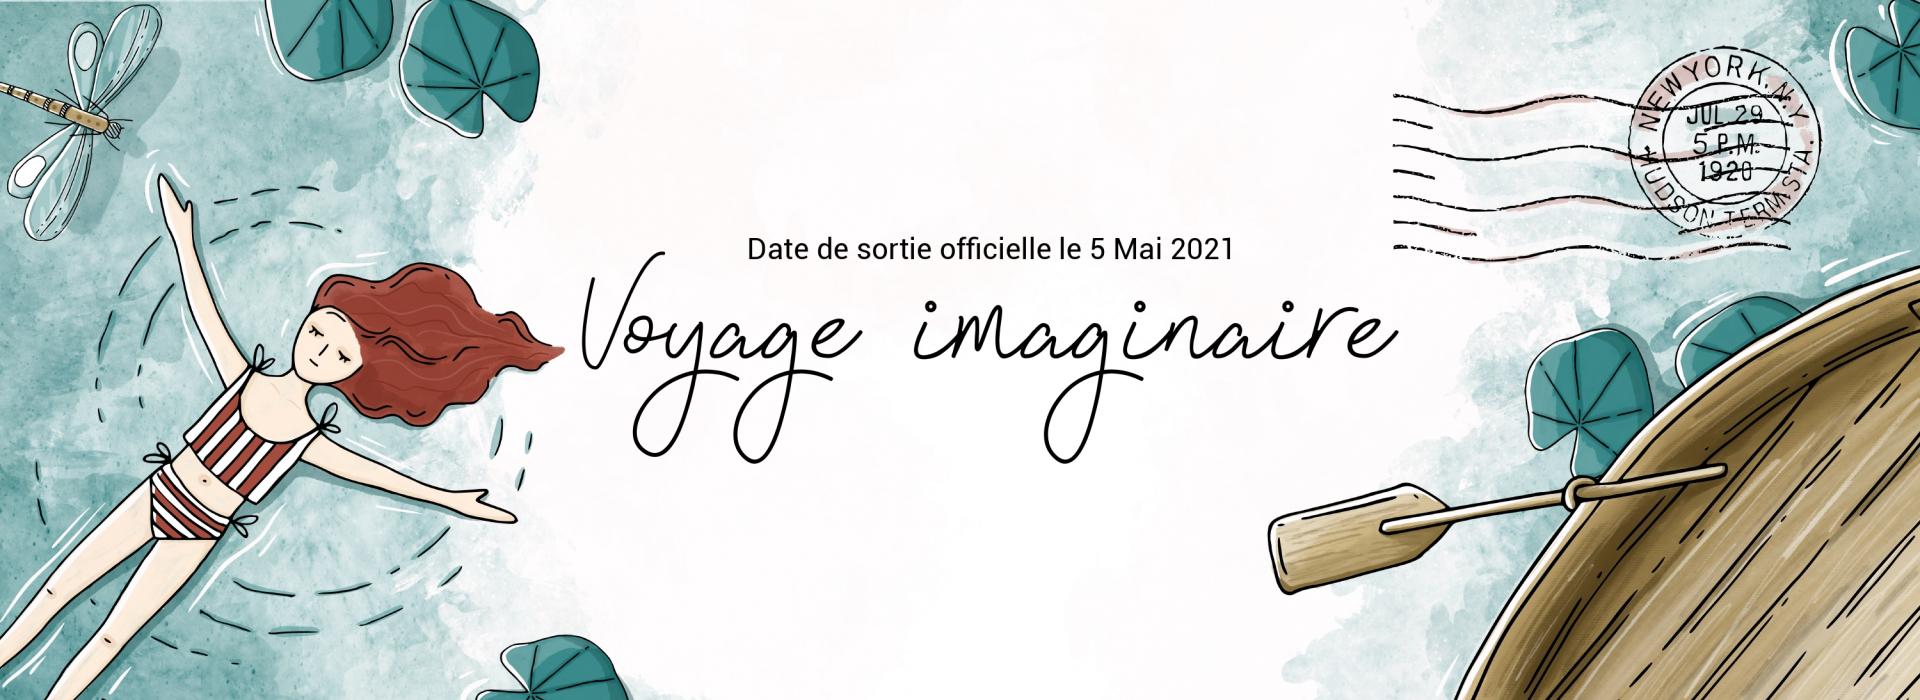 Ban voyage imaginaire 1 page 0001